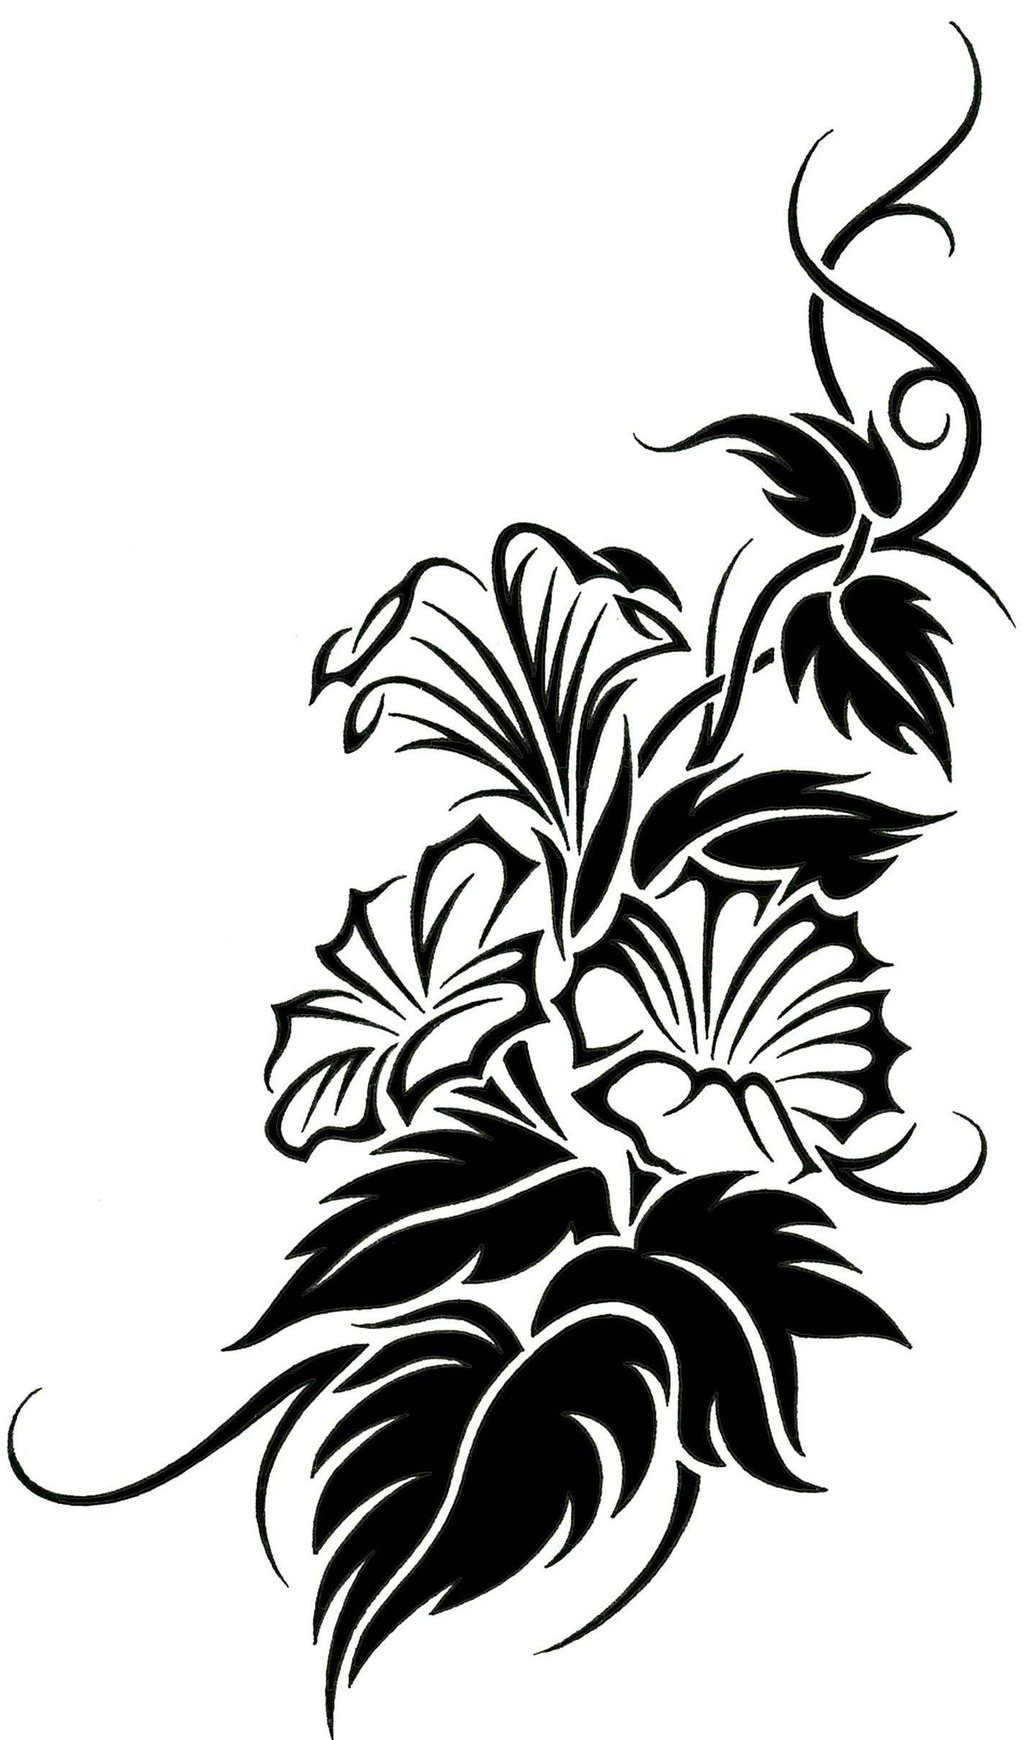 Floral Design Tattoos